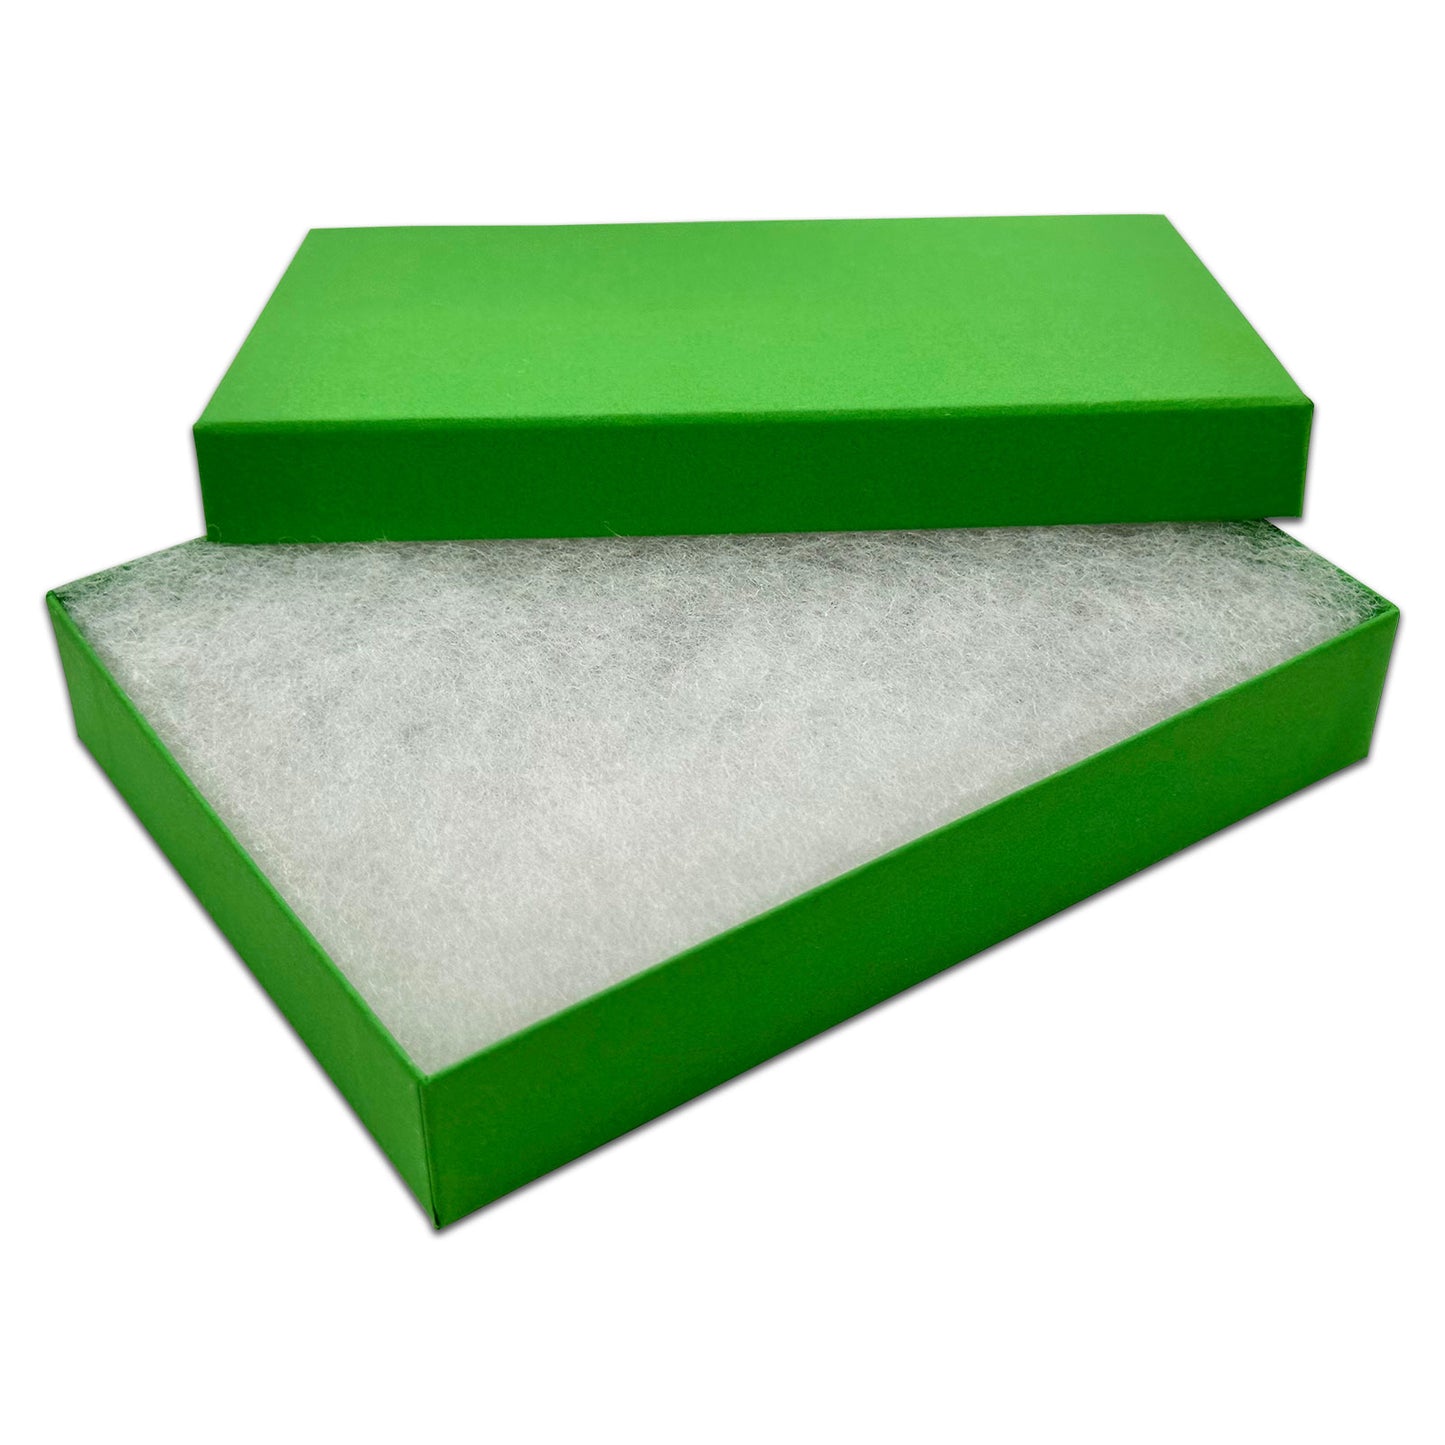 5 7/16" x 3 15/16" x 1" Light Green Cotton Filled Paper Box